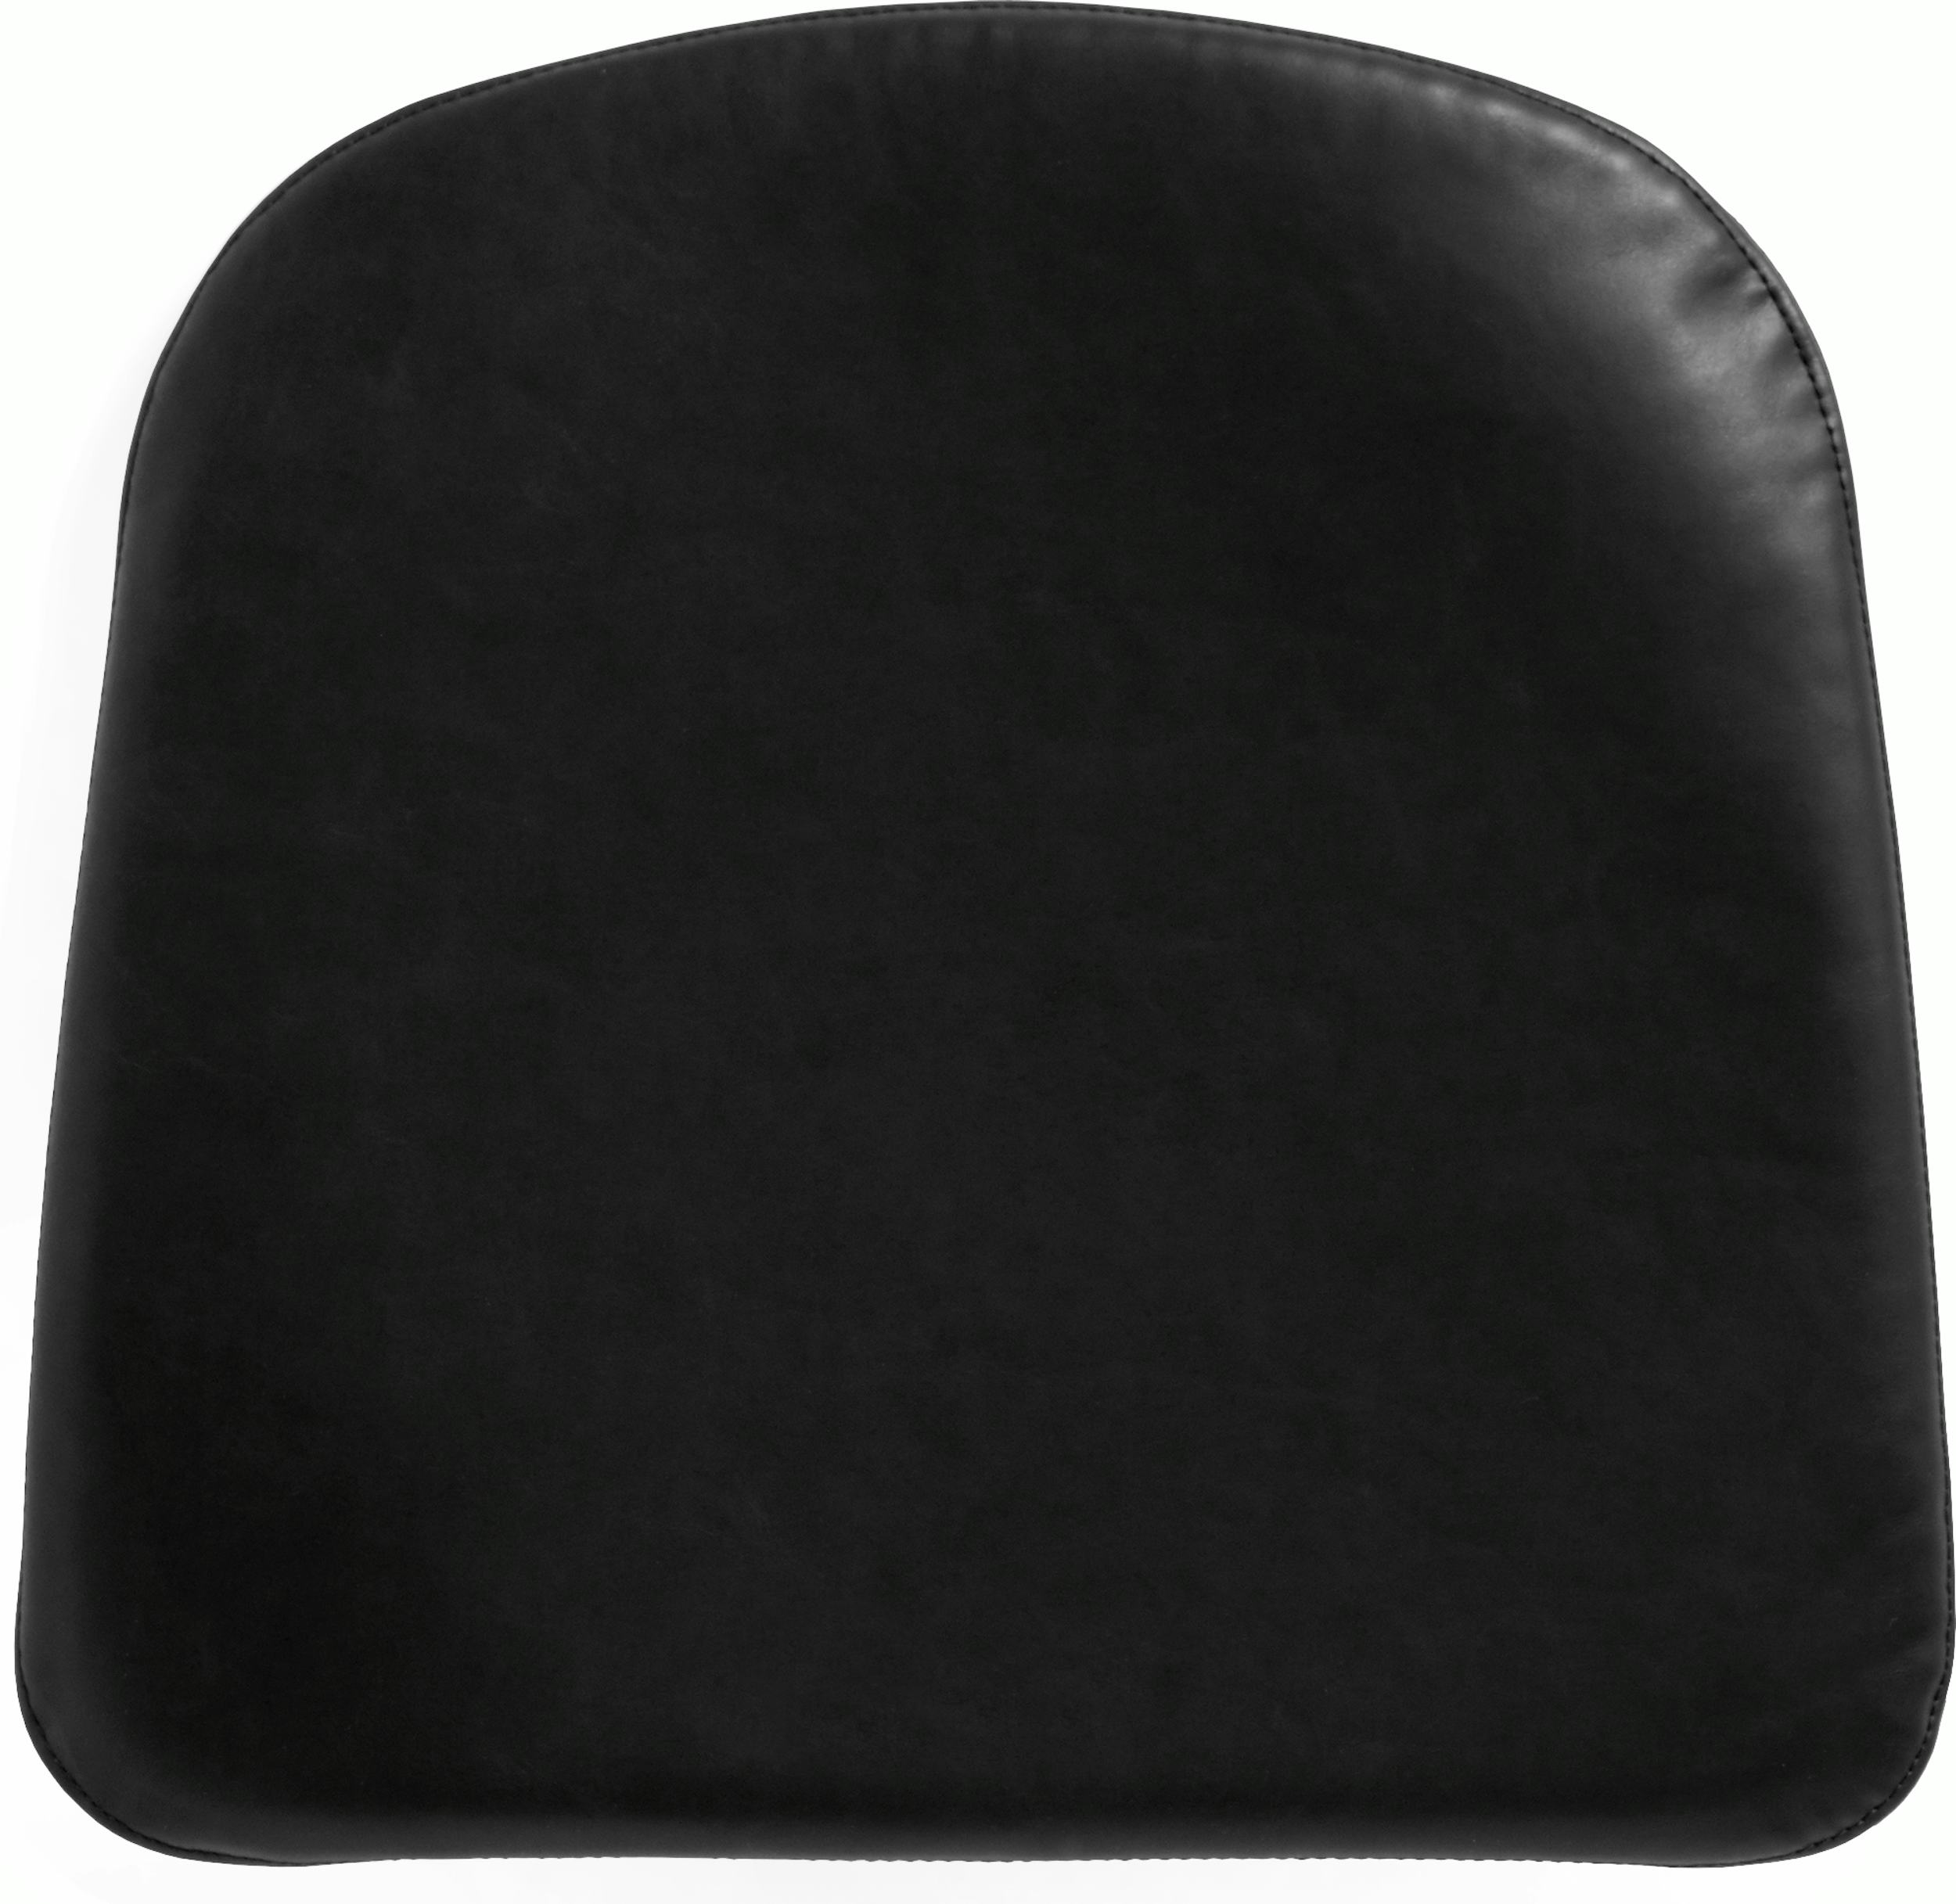 J 42 Seat Cushion, Black at Design Within Reach